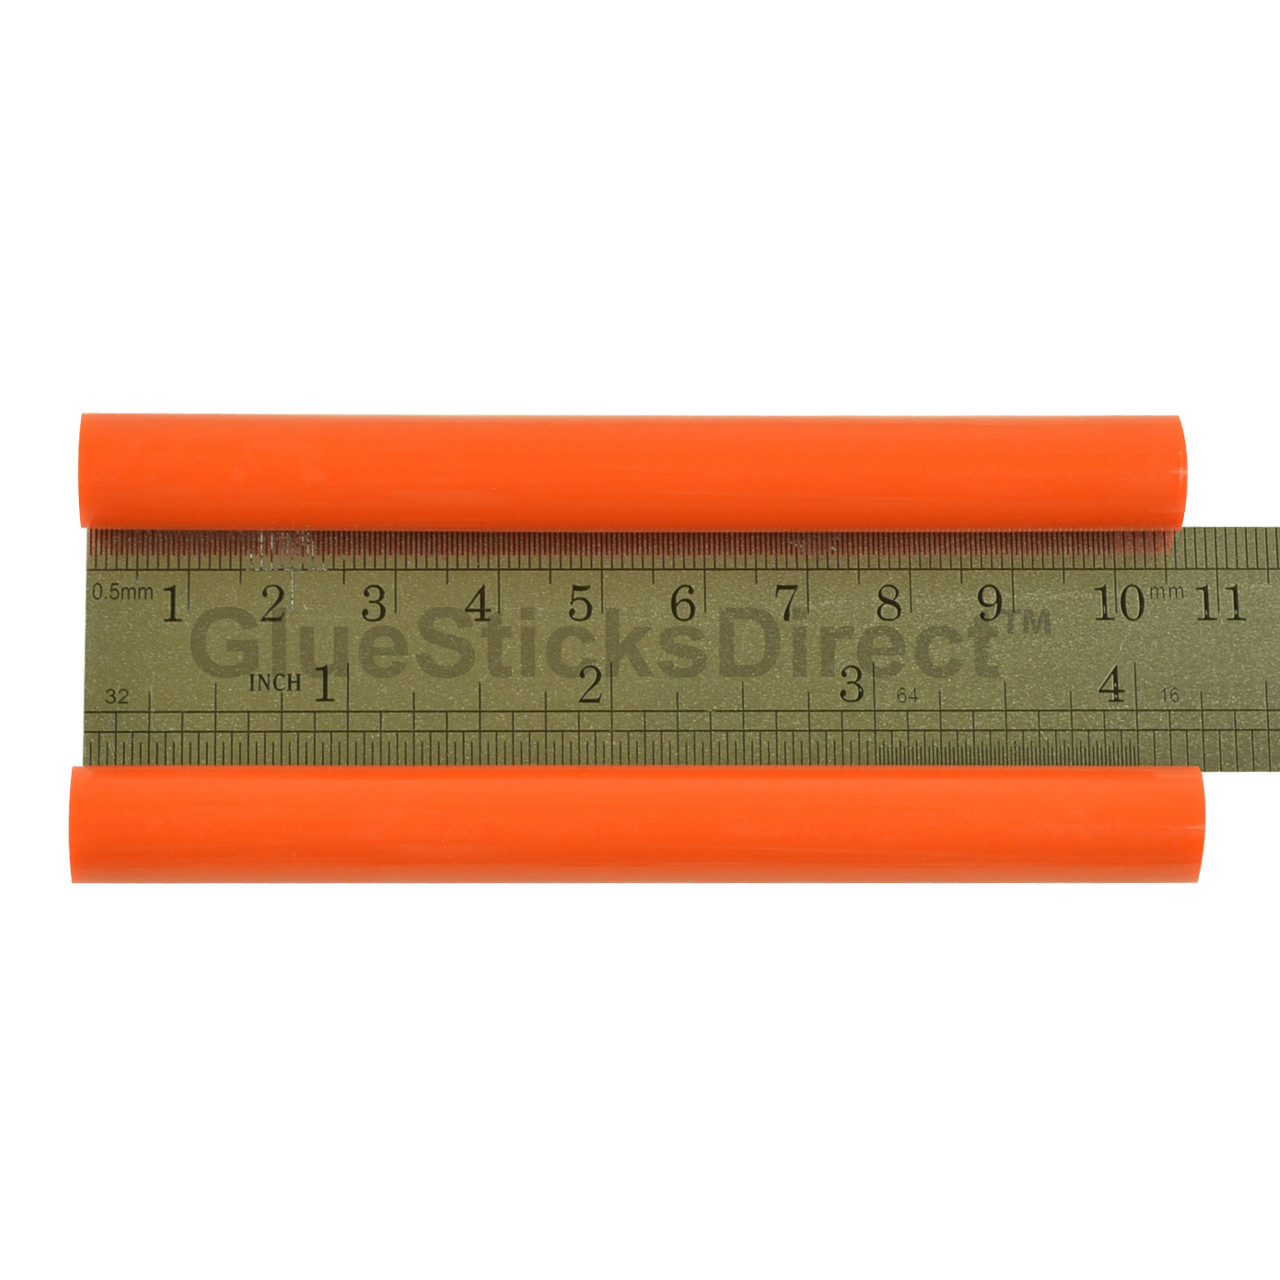 GlueSticksDirect Orange Colored Glue Sticks 7/16 X 4 5 lbs